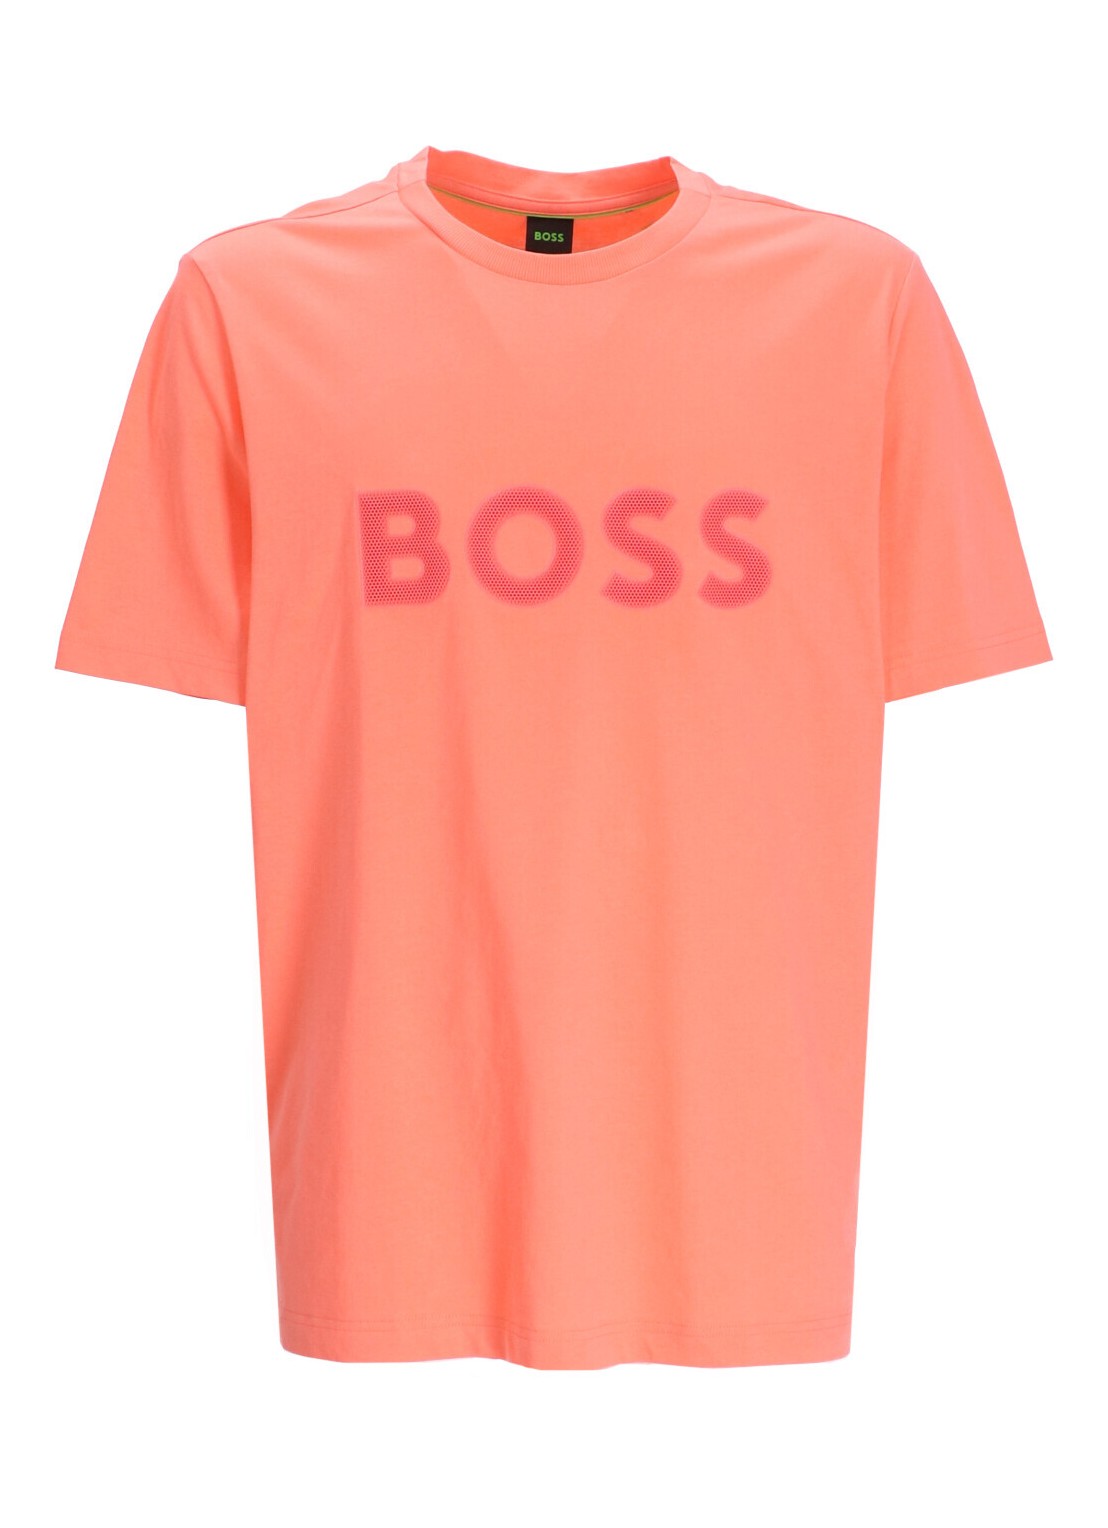 Camiseta boss t-shirt mantee 1 - 50512866 649 talla XXL
 